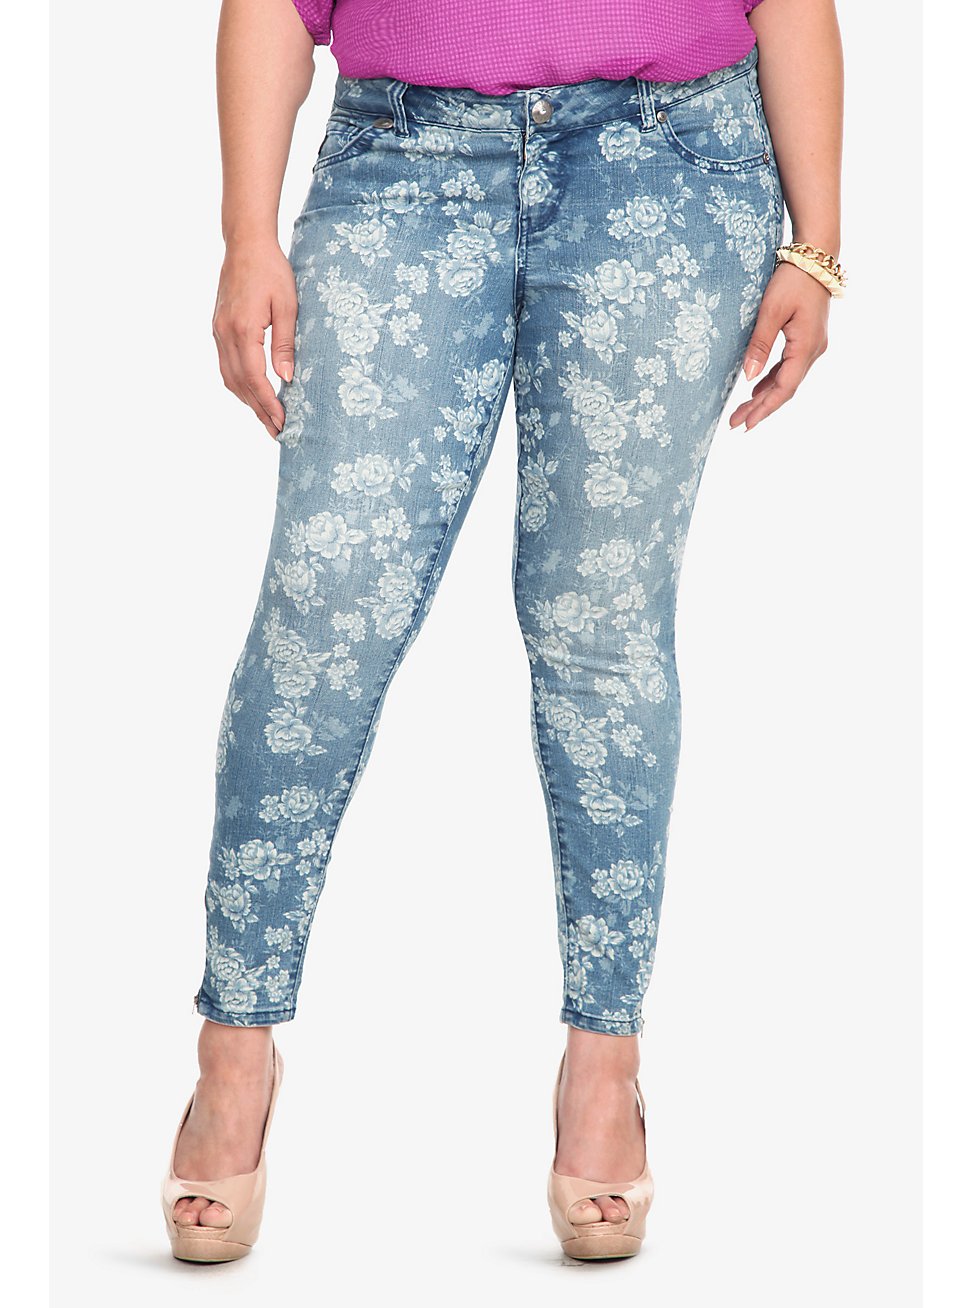 Torrid Denim - Cabbage Rose Print Ankle Zip Stiletto Jeans, BLUE, hi-res